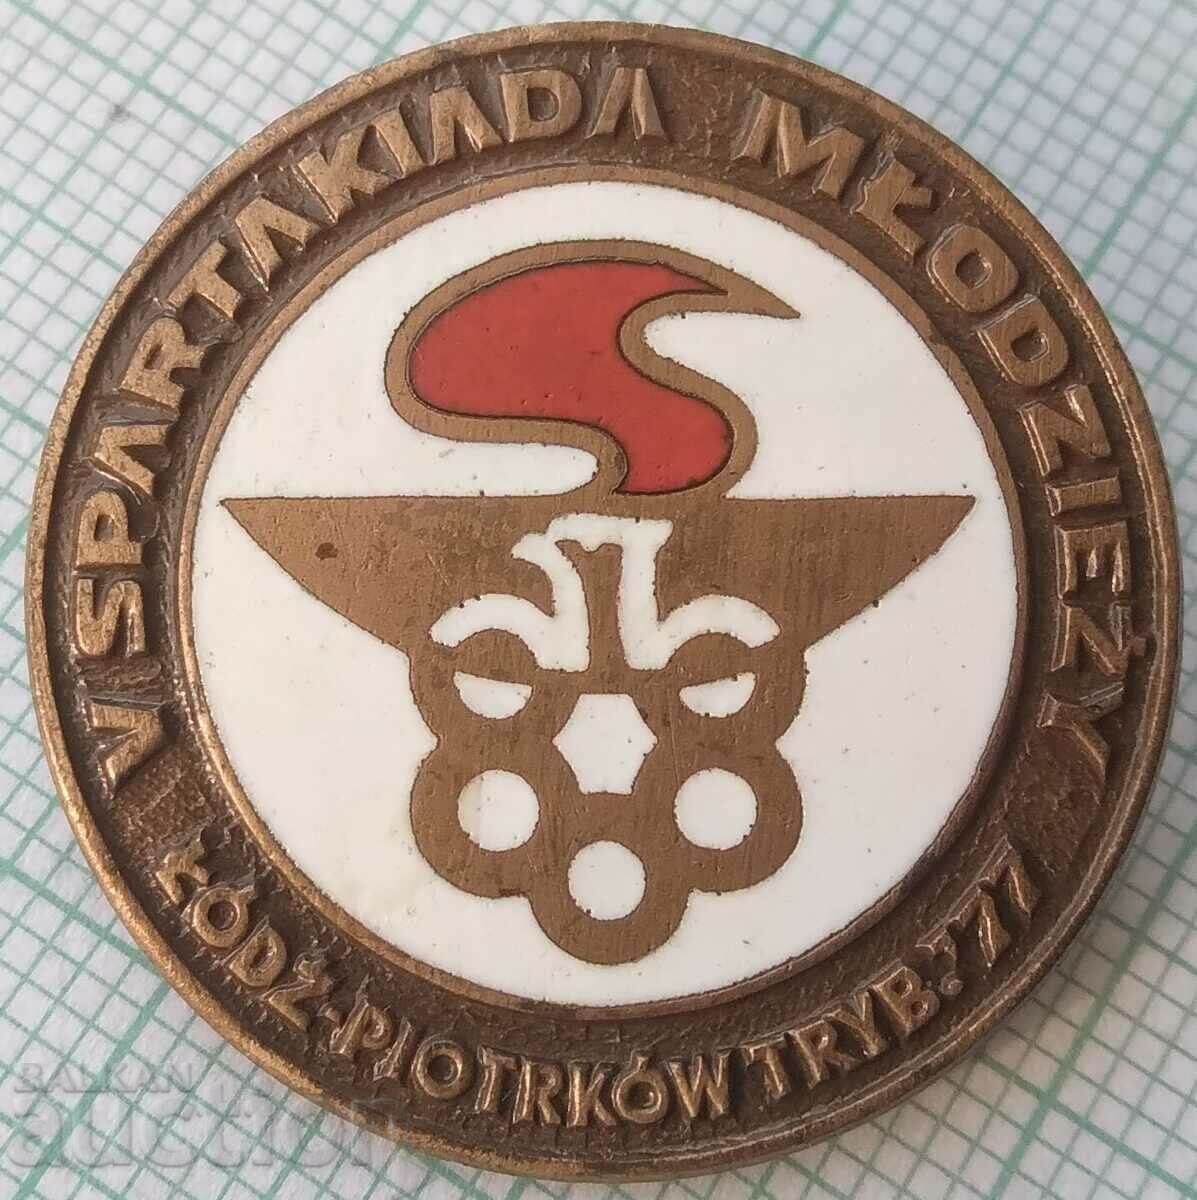 14725 Youth Games 1977 Lodz Poland - bronze enamel